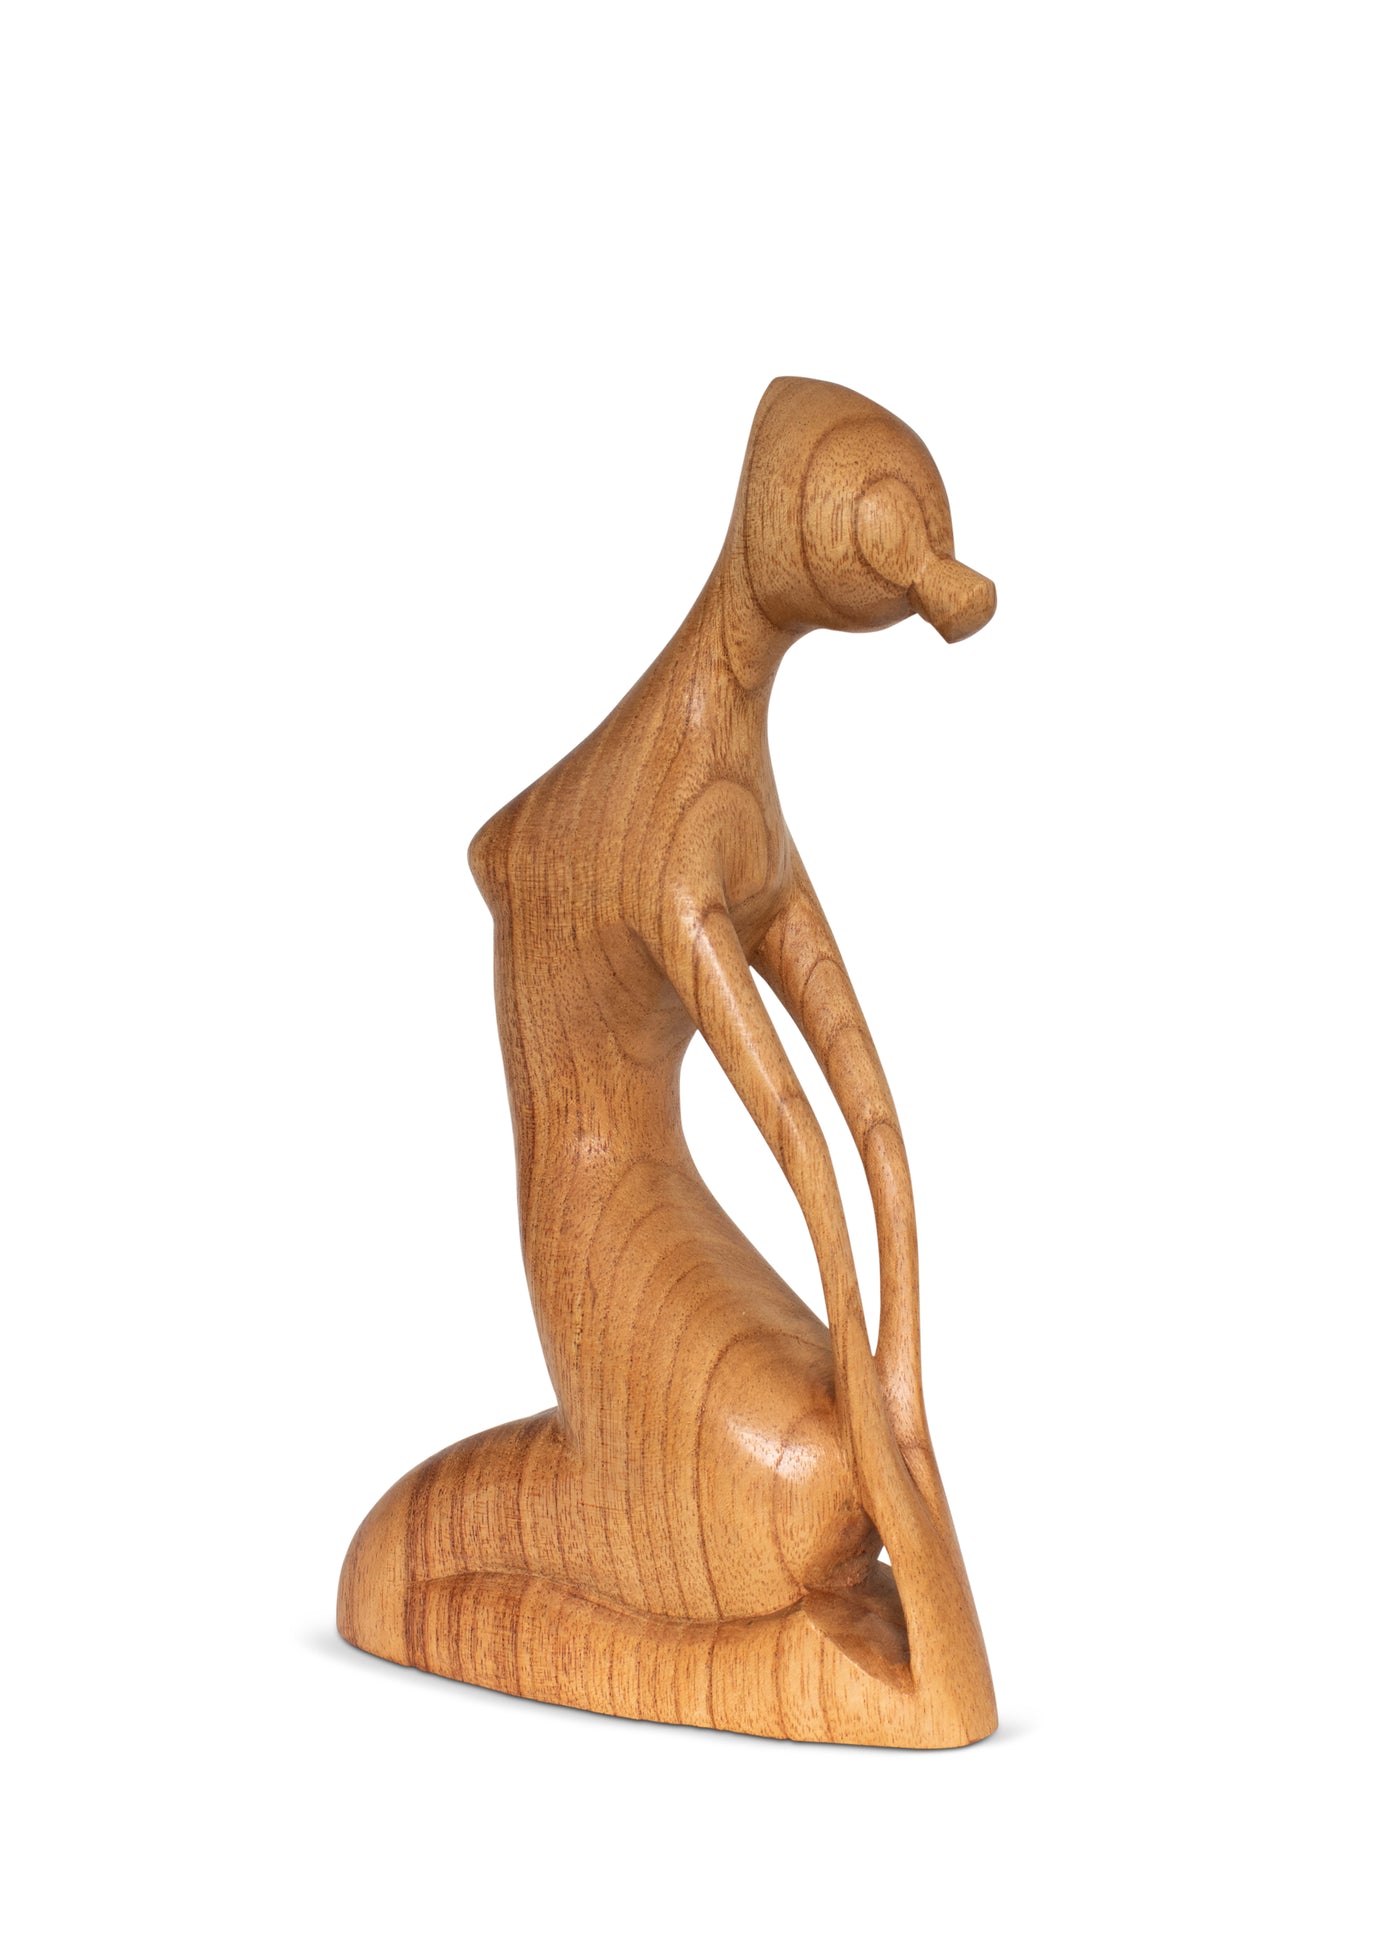 10" Wooden Handmade Mini Yoga Figurines, Yoga Pose Statue, Yoga Room Studio Decor, Mindful Home Decor Yogi Gift, Decorative Shelf Decor Objects, Zen Inspired - Thunderbolt Pose